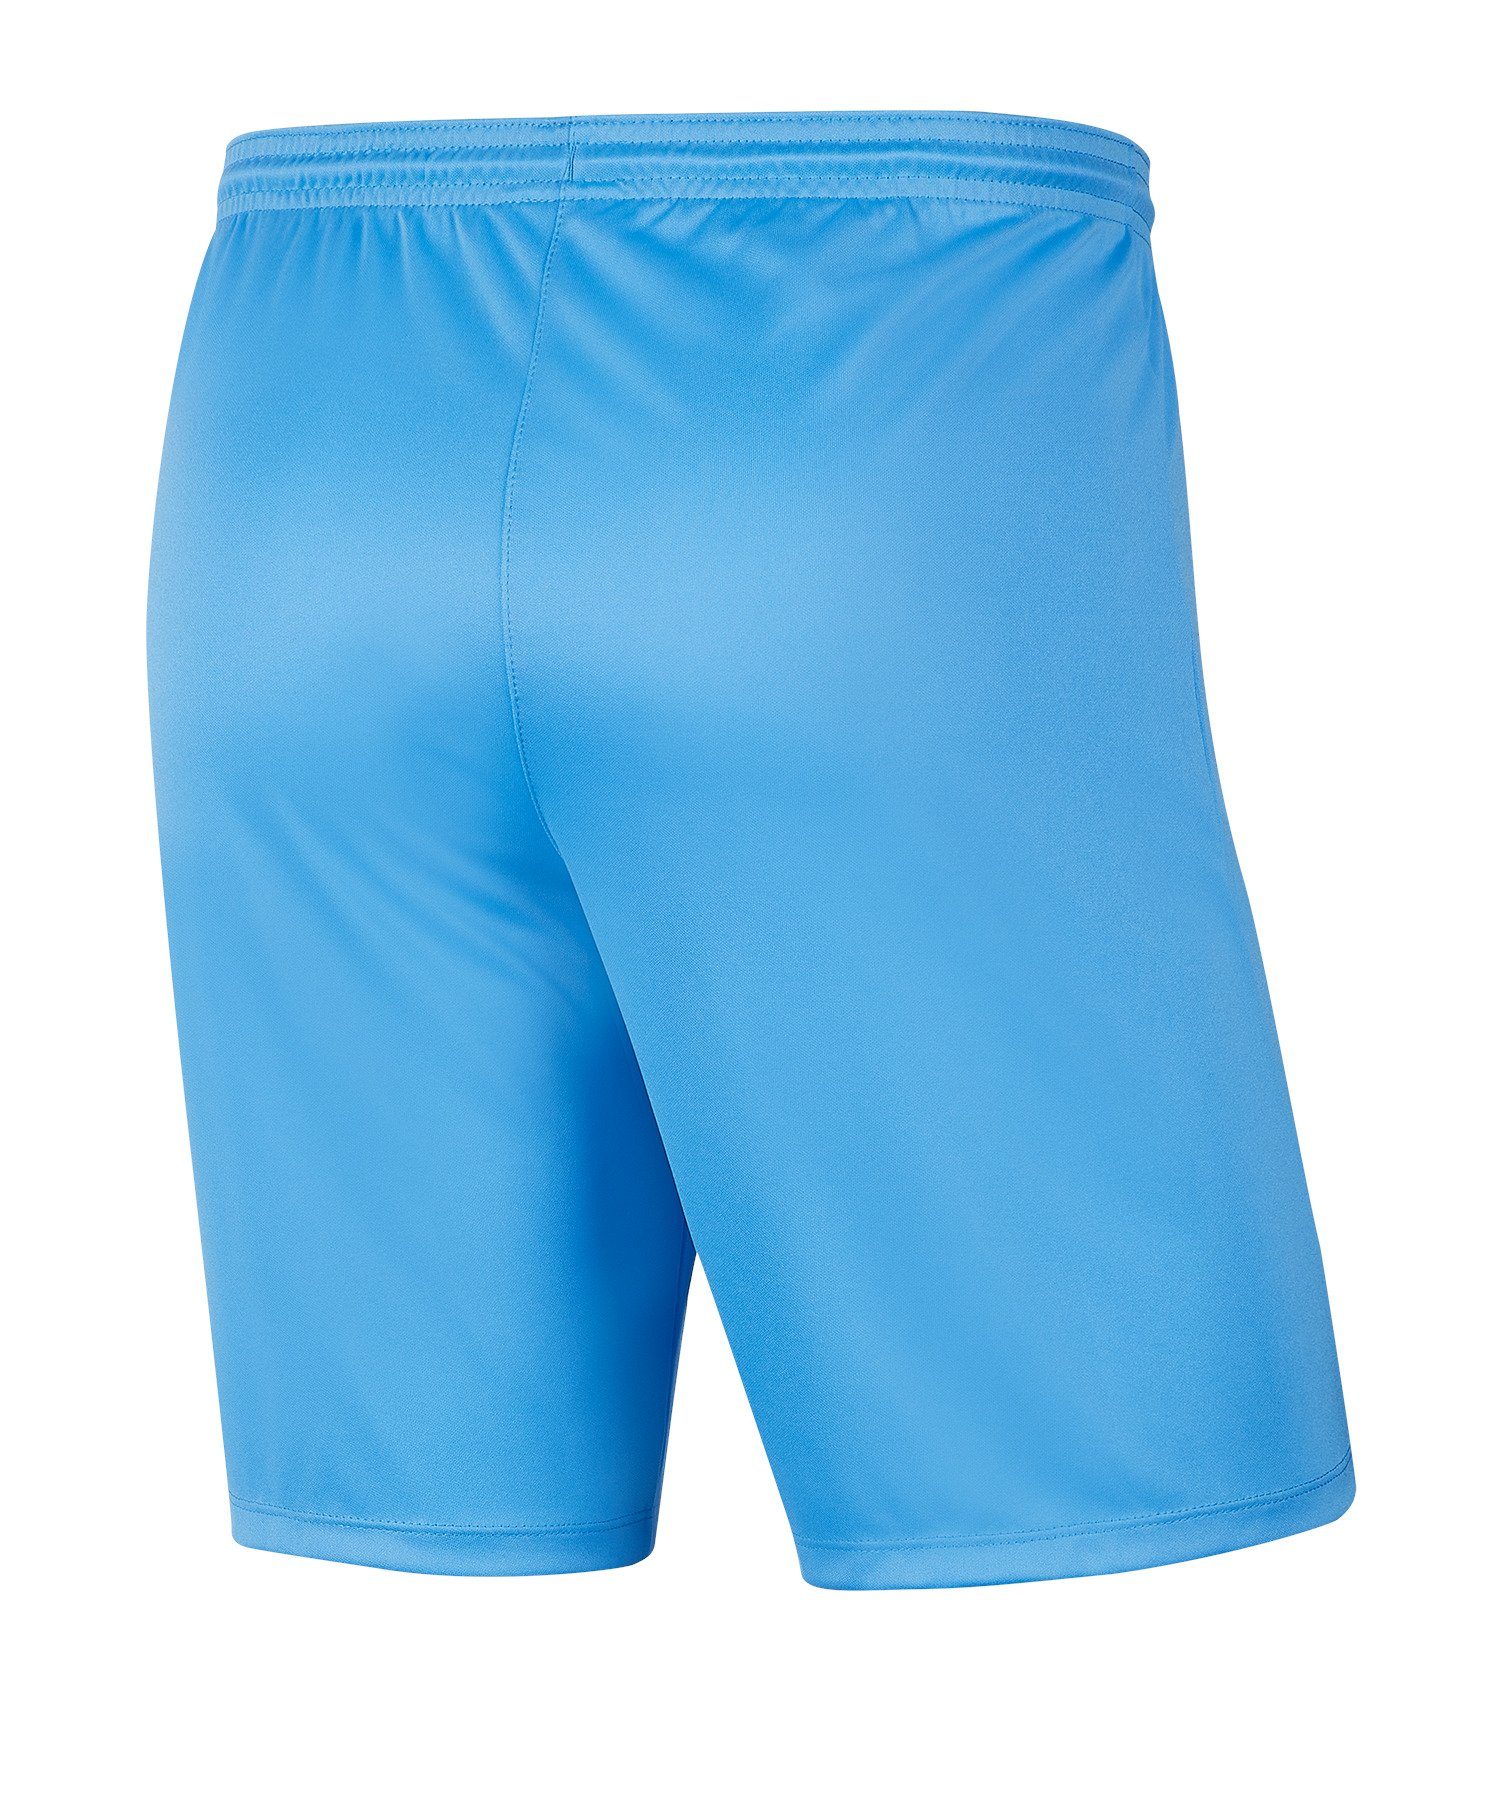 Nike Park blauweiss Sporthose III Short